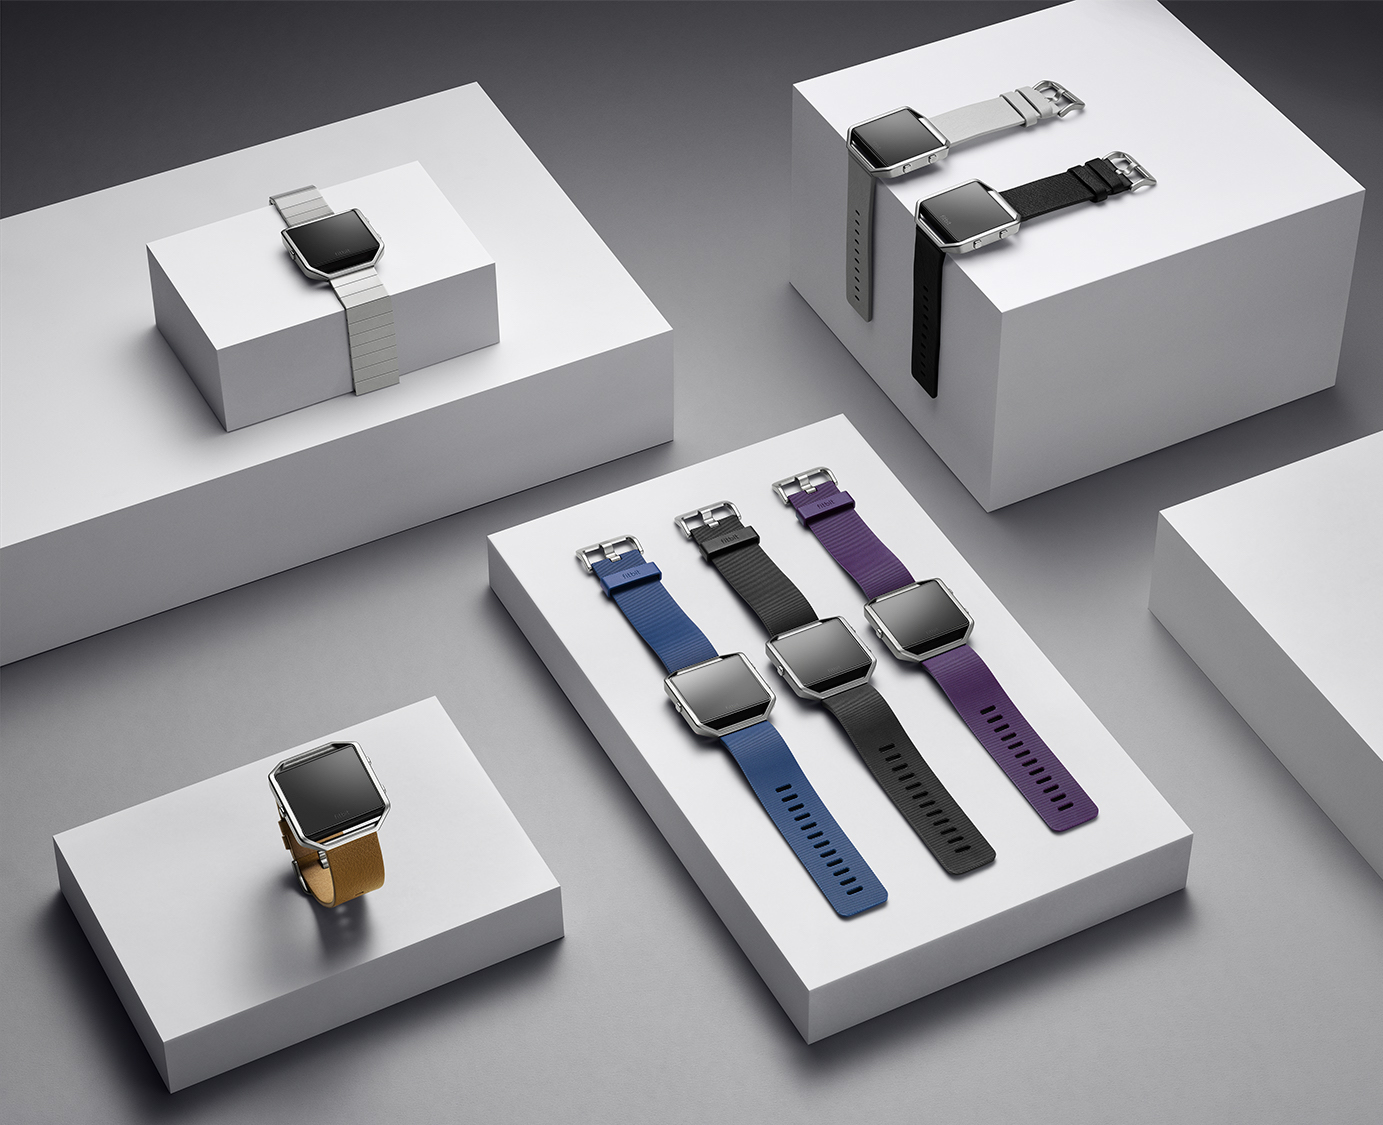 Det kommer nye Fitbit-produkter i år.